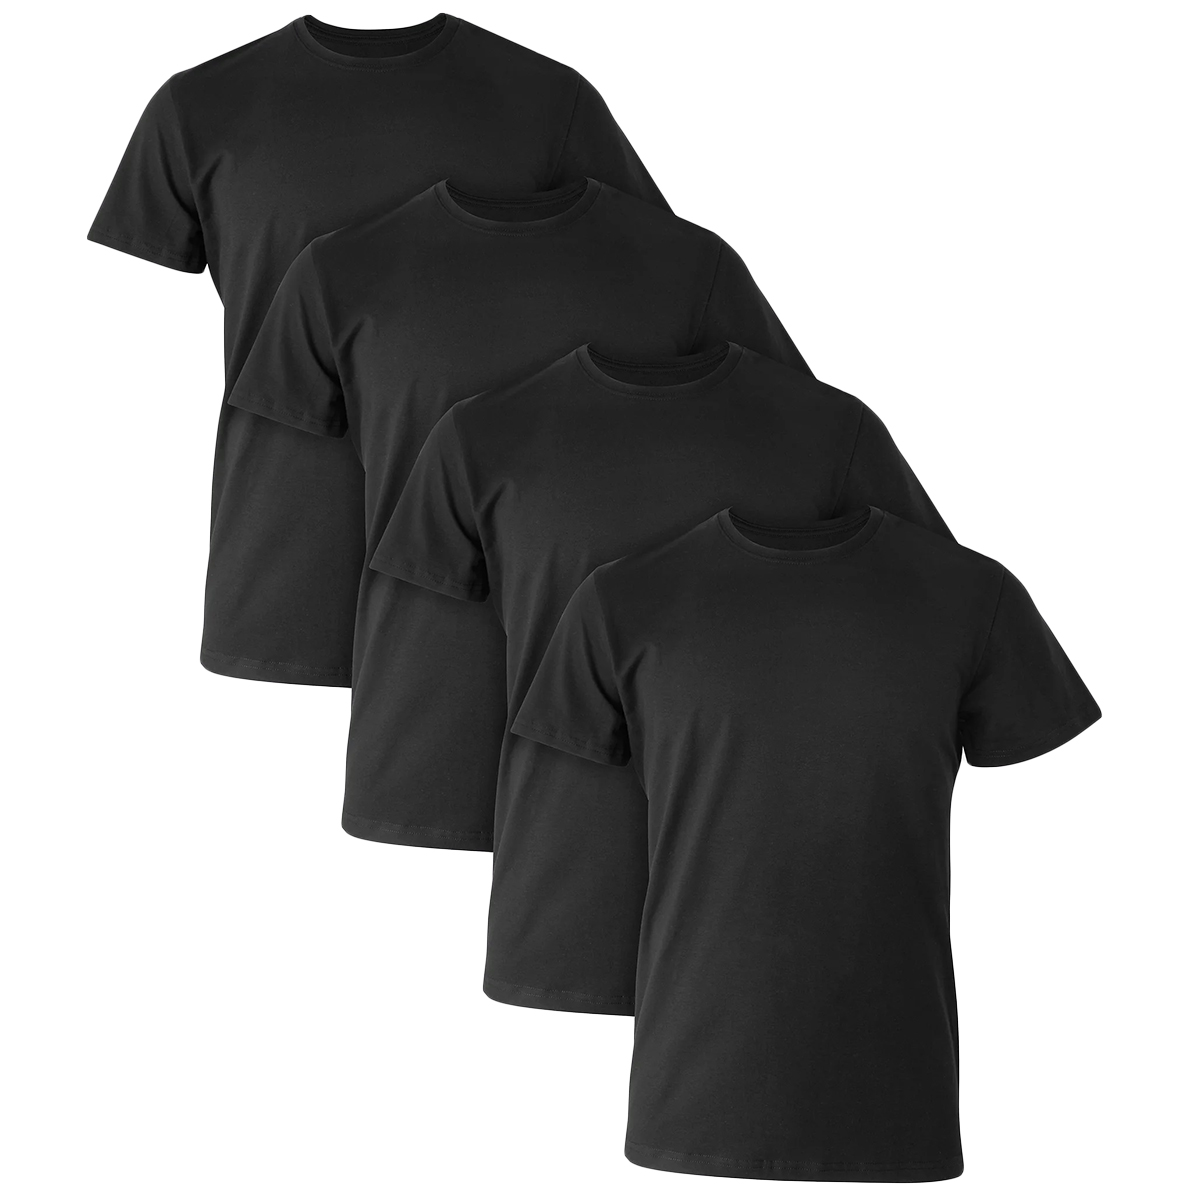 Hanes Men's Ultimate Comfort Fit Stretch Crewneck Undershirts, 4 Pack (Size 2X)